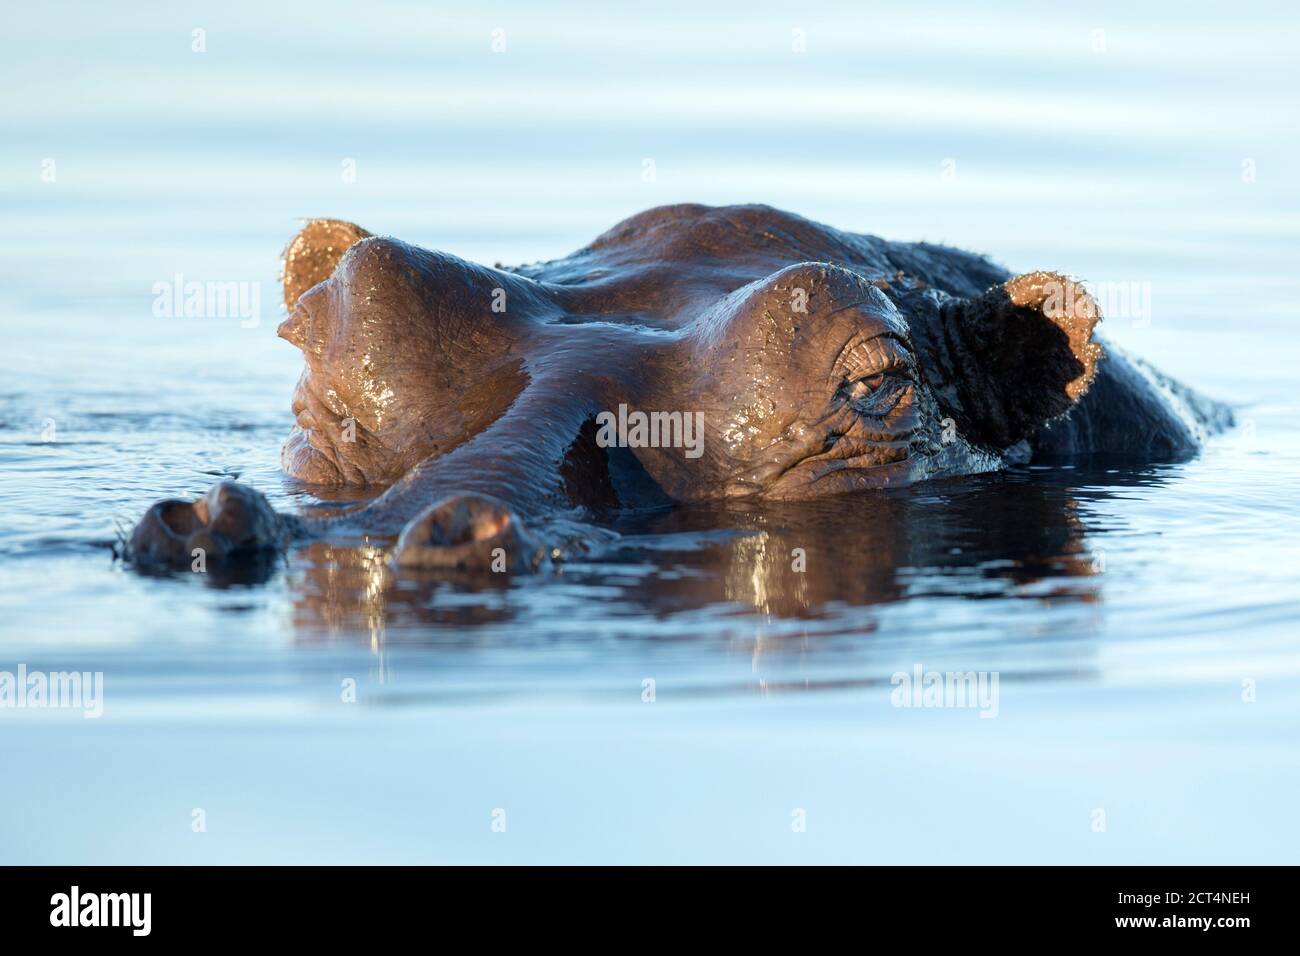 A Hippo raises its head above the water in Chobe National Park, Kasane, Botswana Stock Photo